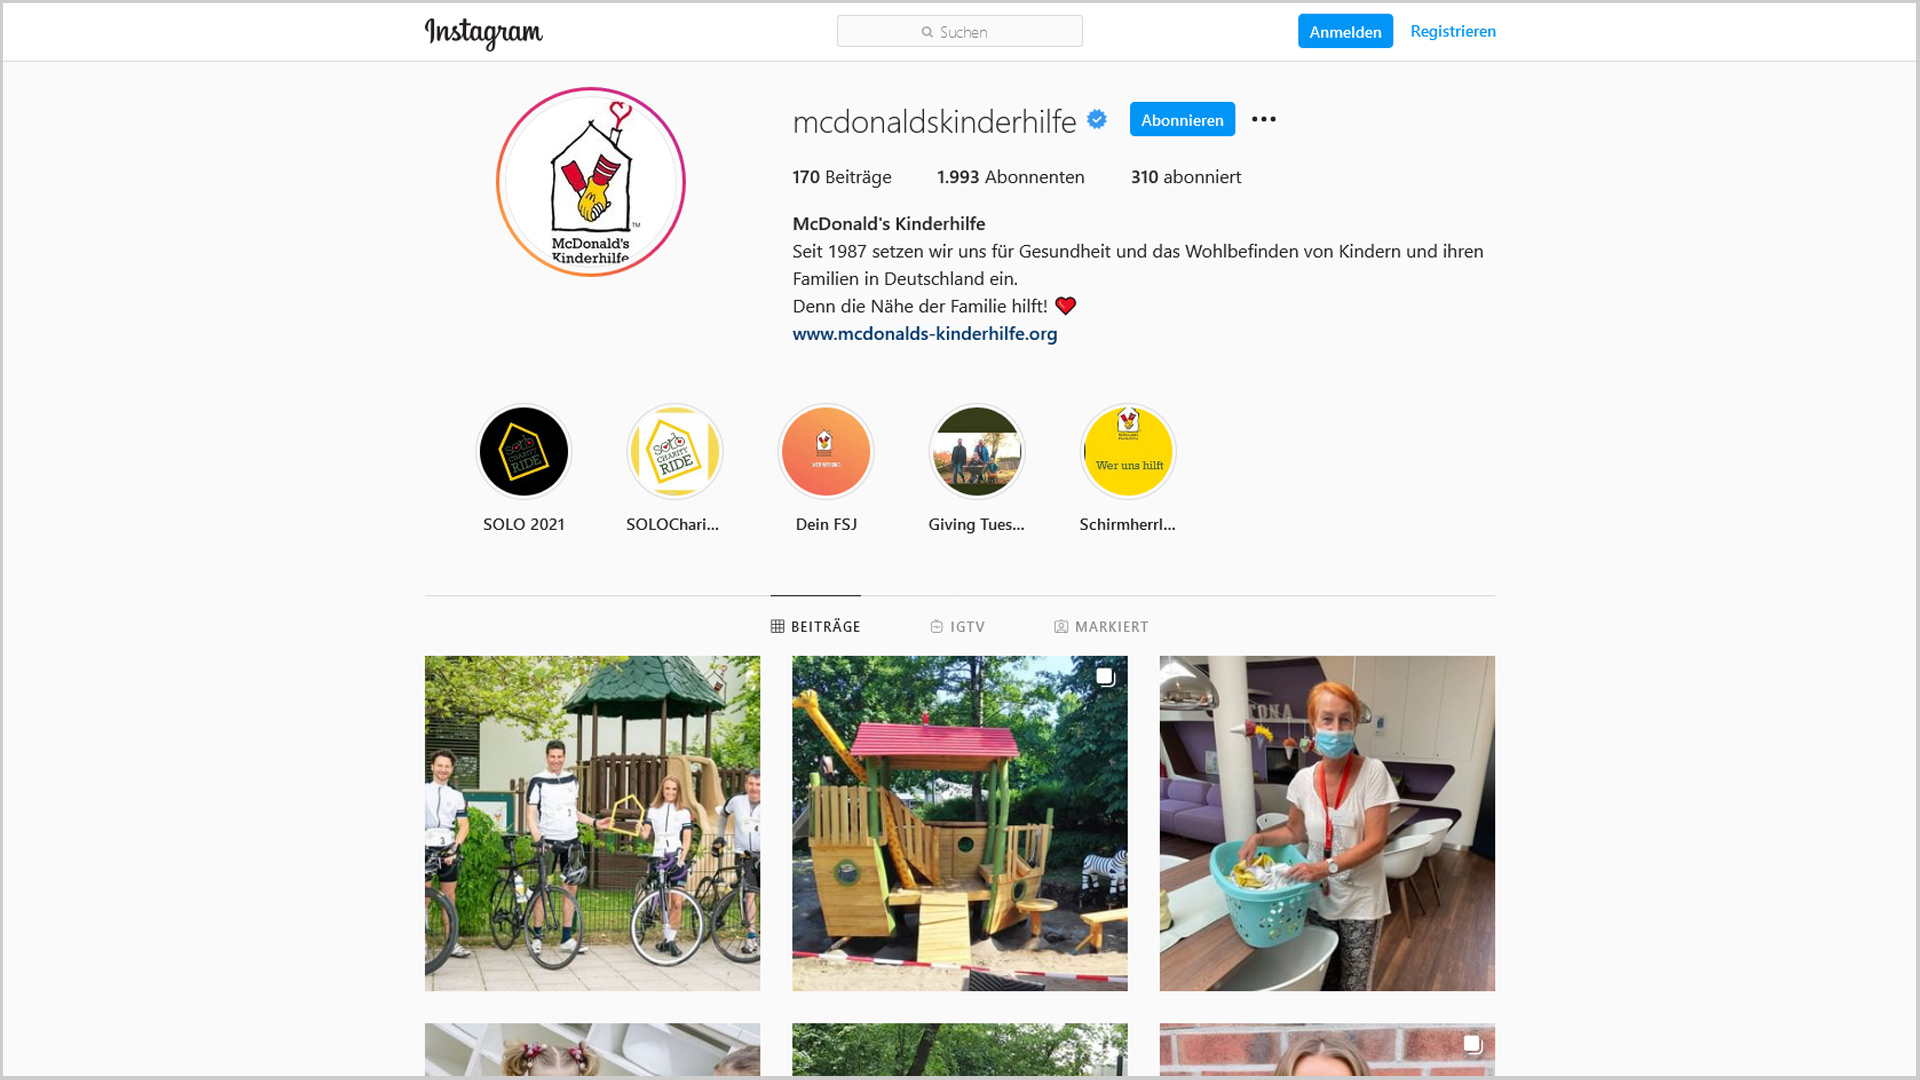 McDonald's Kinderhilfe Stiftung auf Instagram